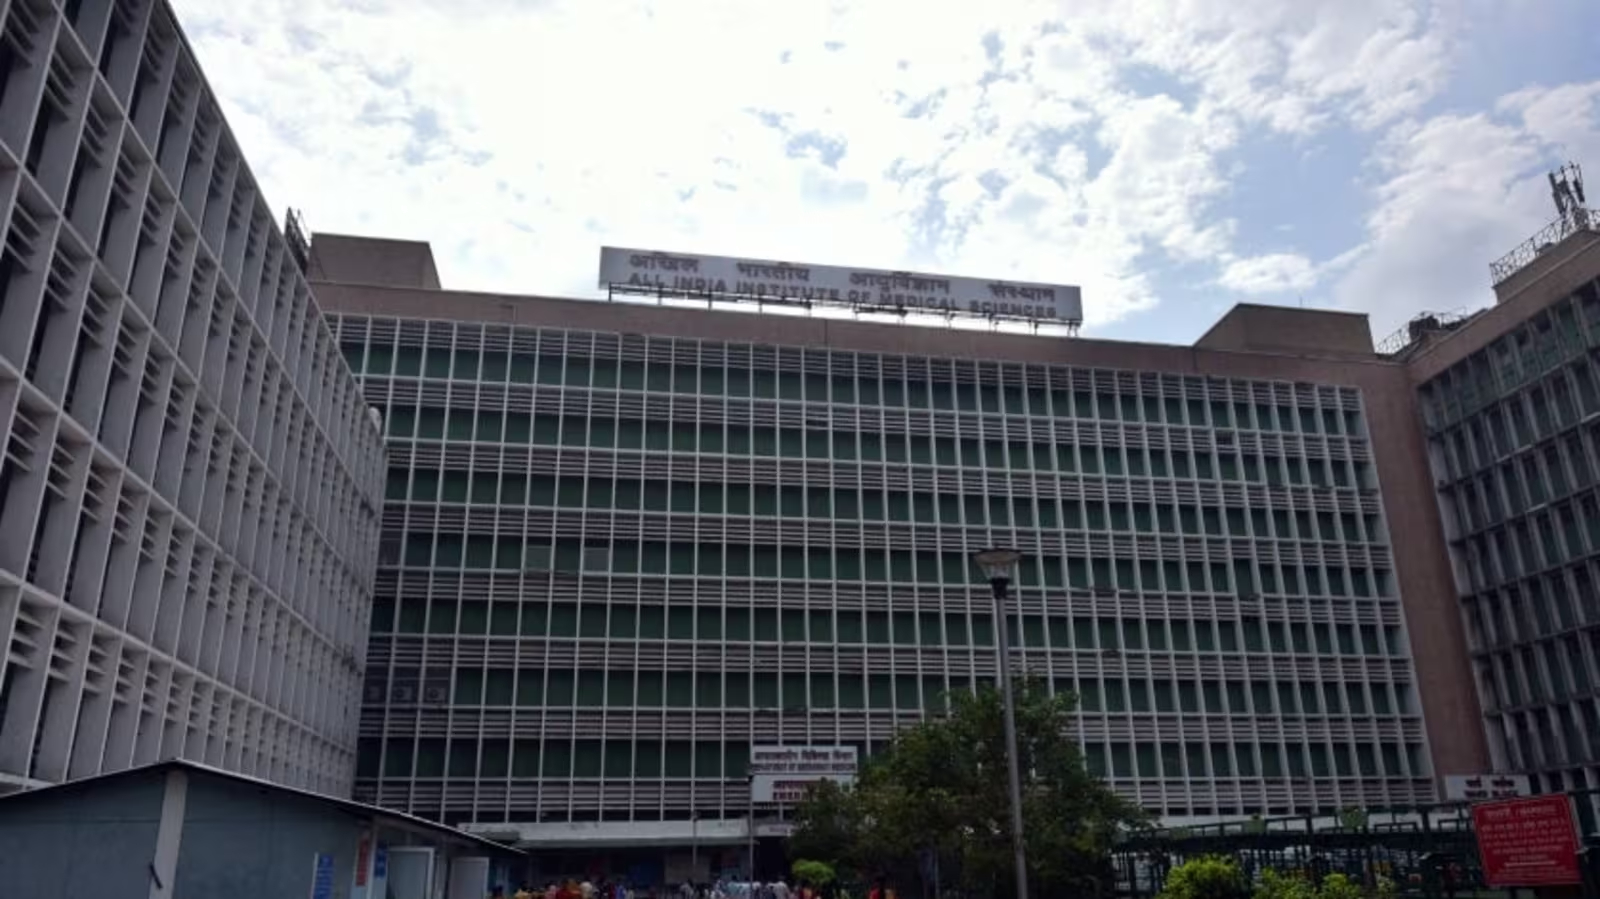 Serviced Apartment near by AIIMS hospital Delhi India